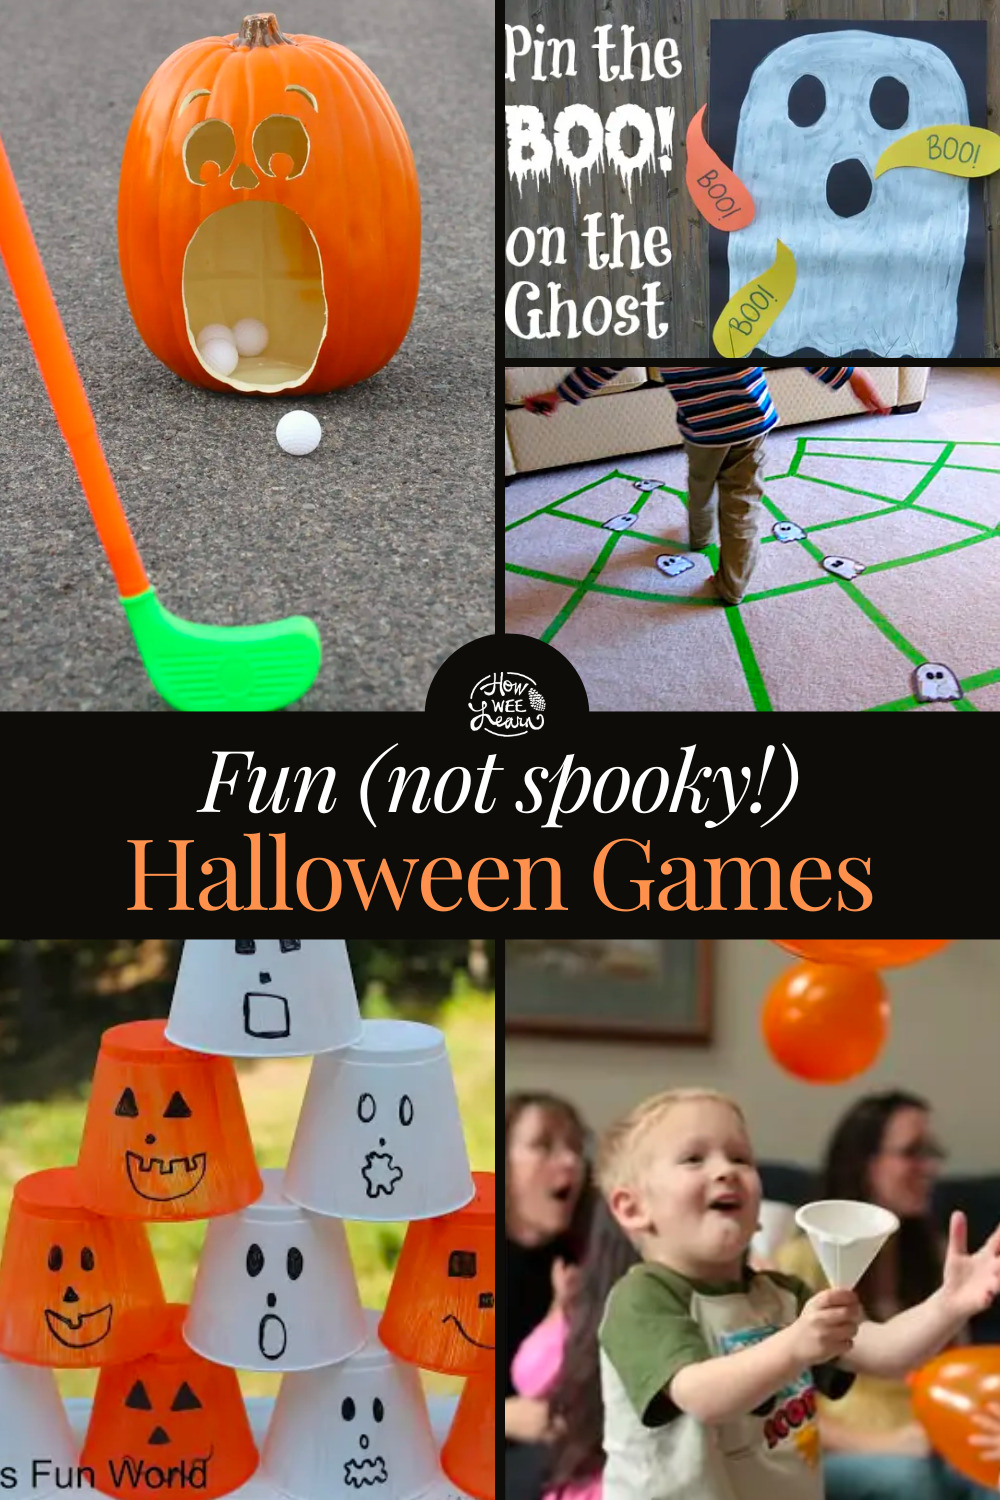 Fun (Not Spooky) Halloween Games for Little Ones